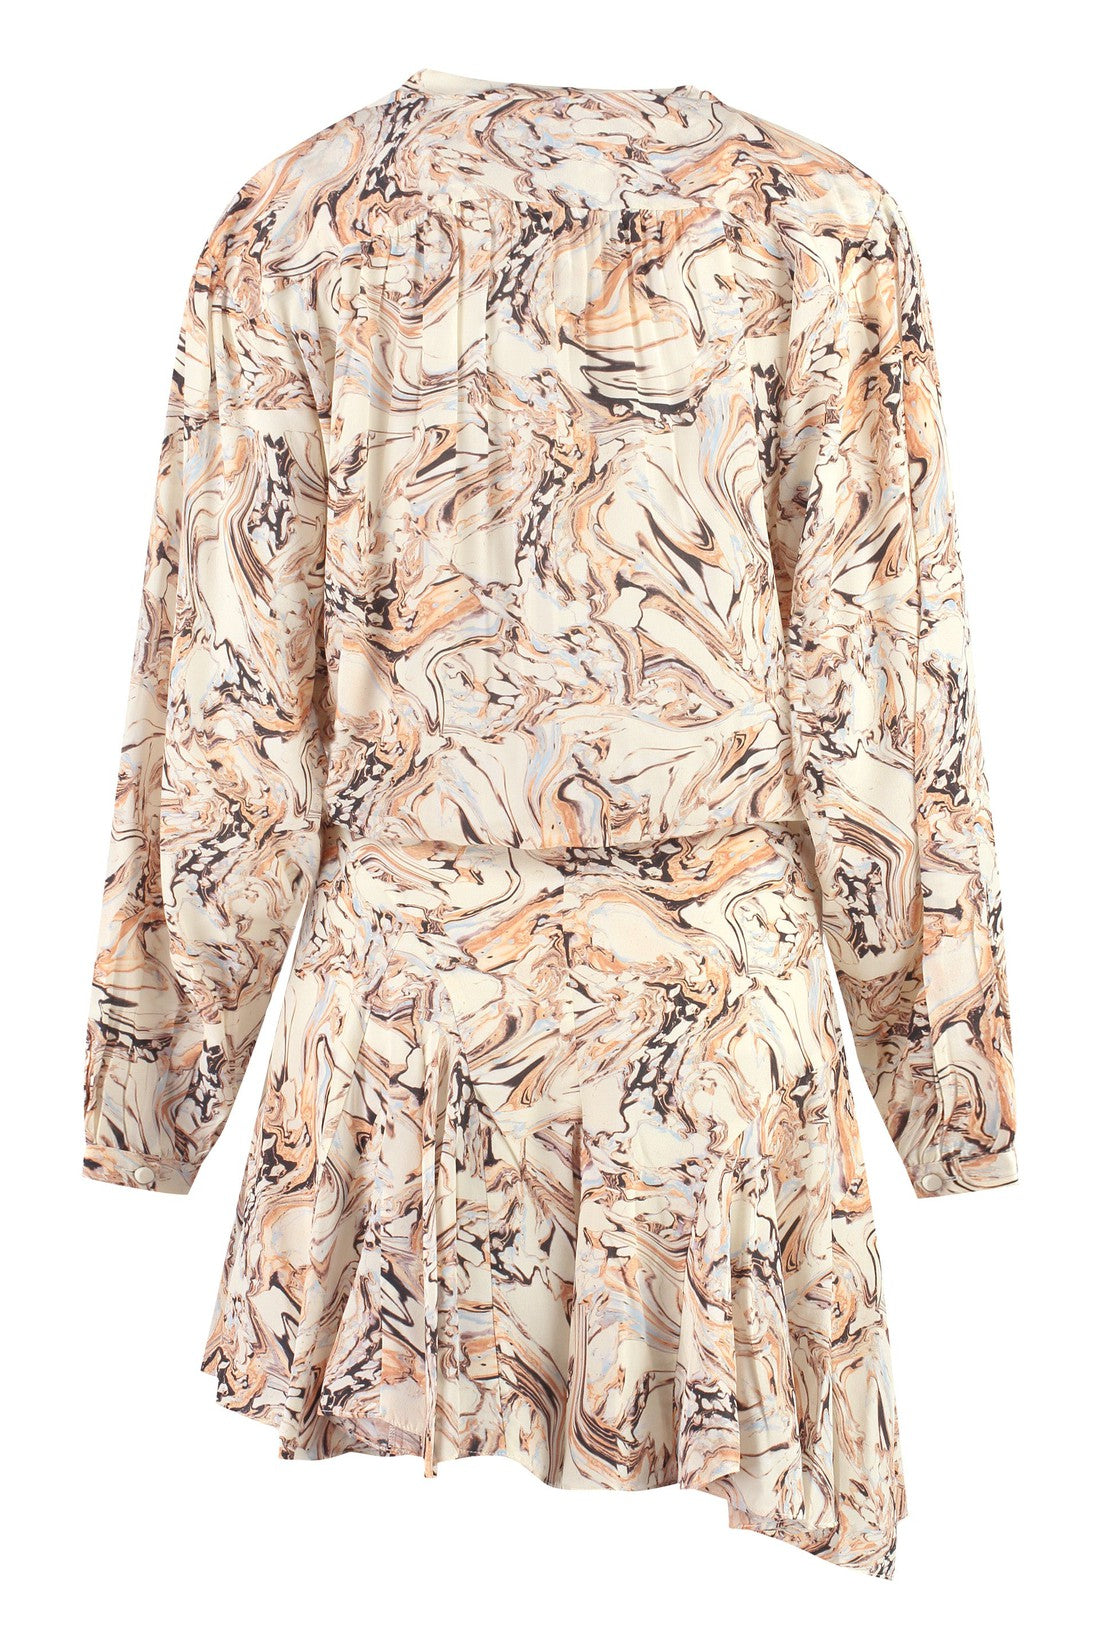 Isabel Marant-OUTLET-SALE-Printed silk dress-ARCHIVIST